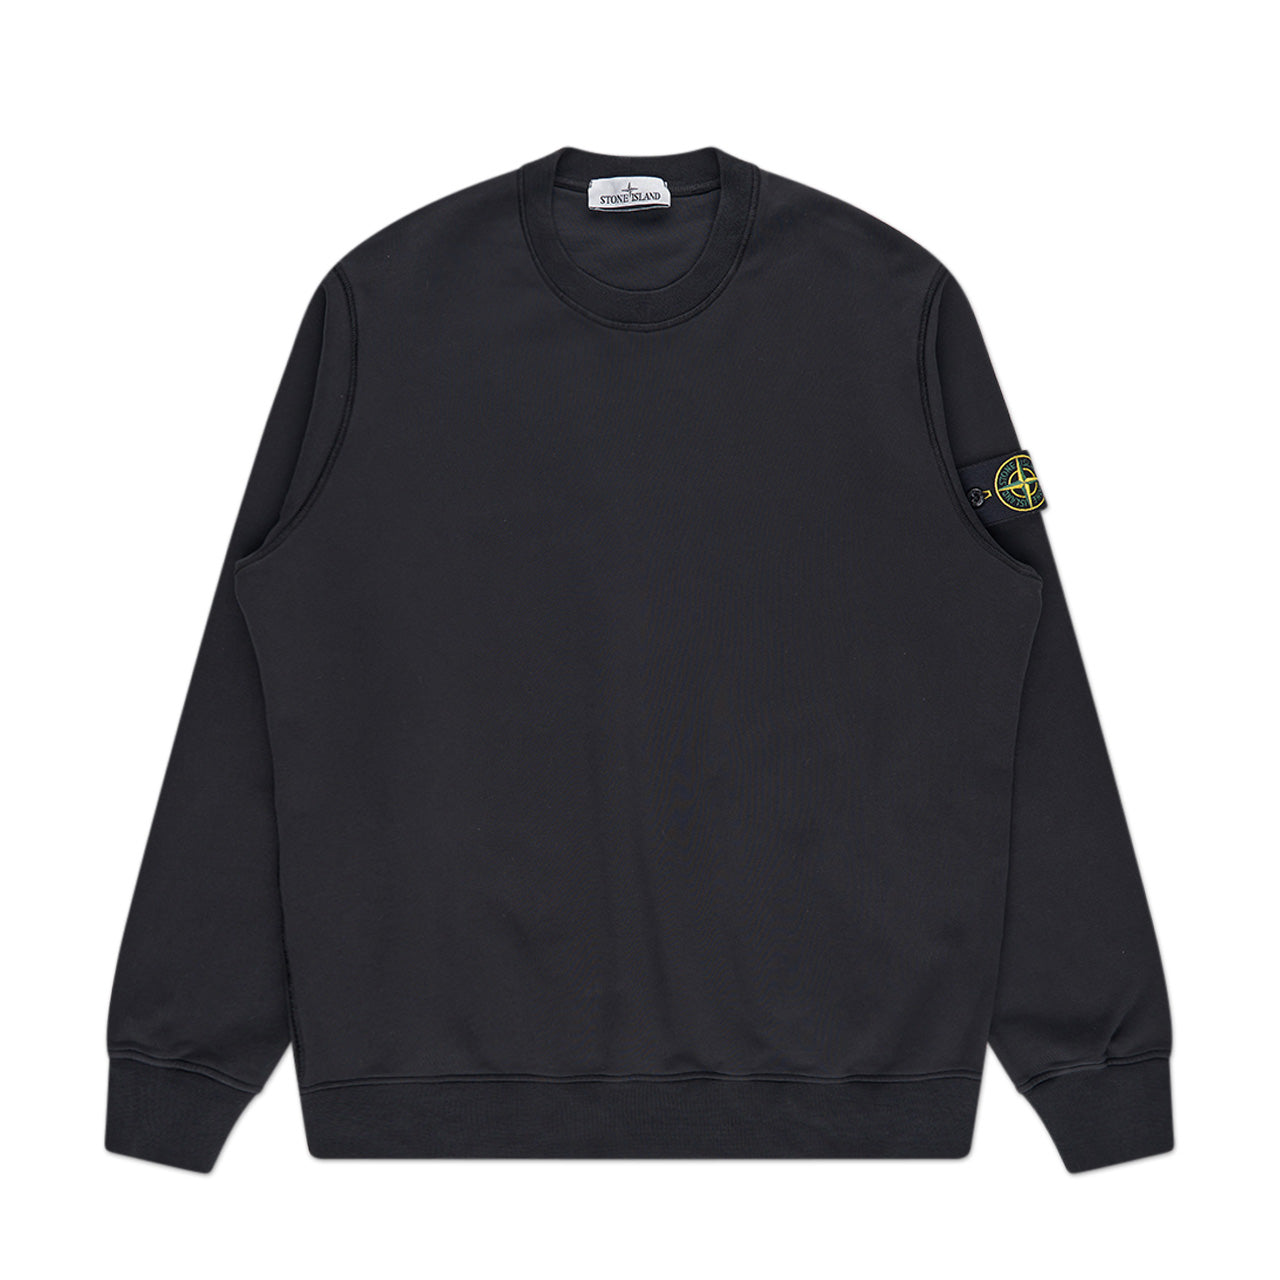 stone island sweatshirt (black)